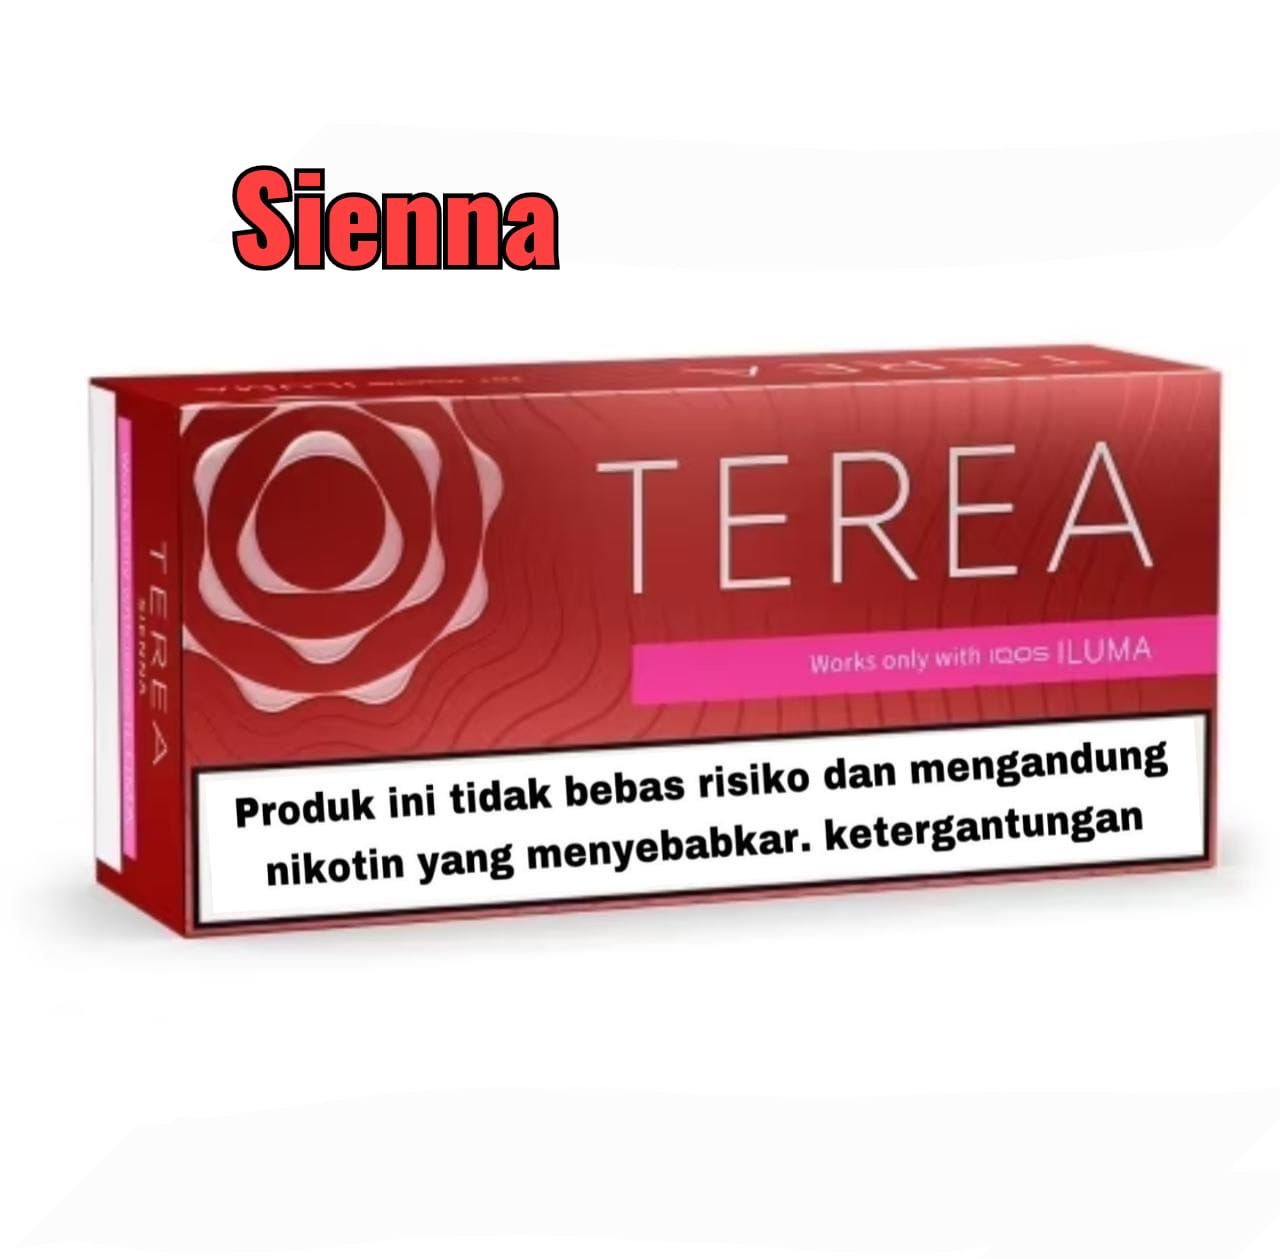 IQOS Terea Sienna Indonesian